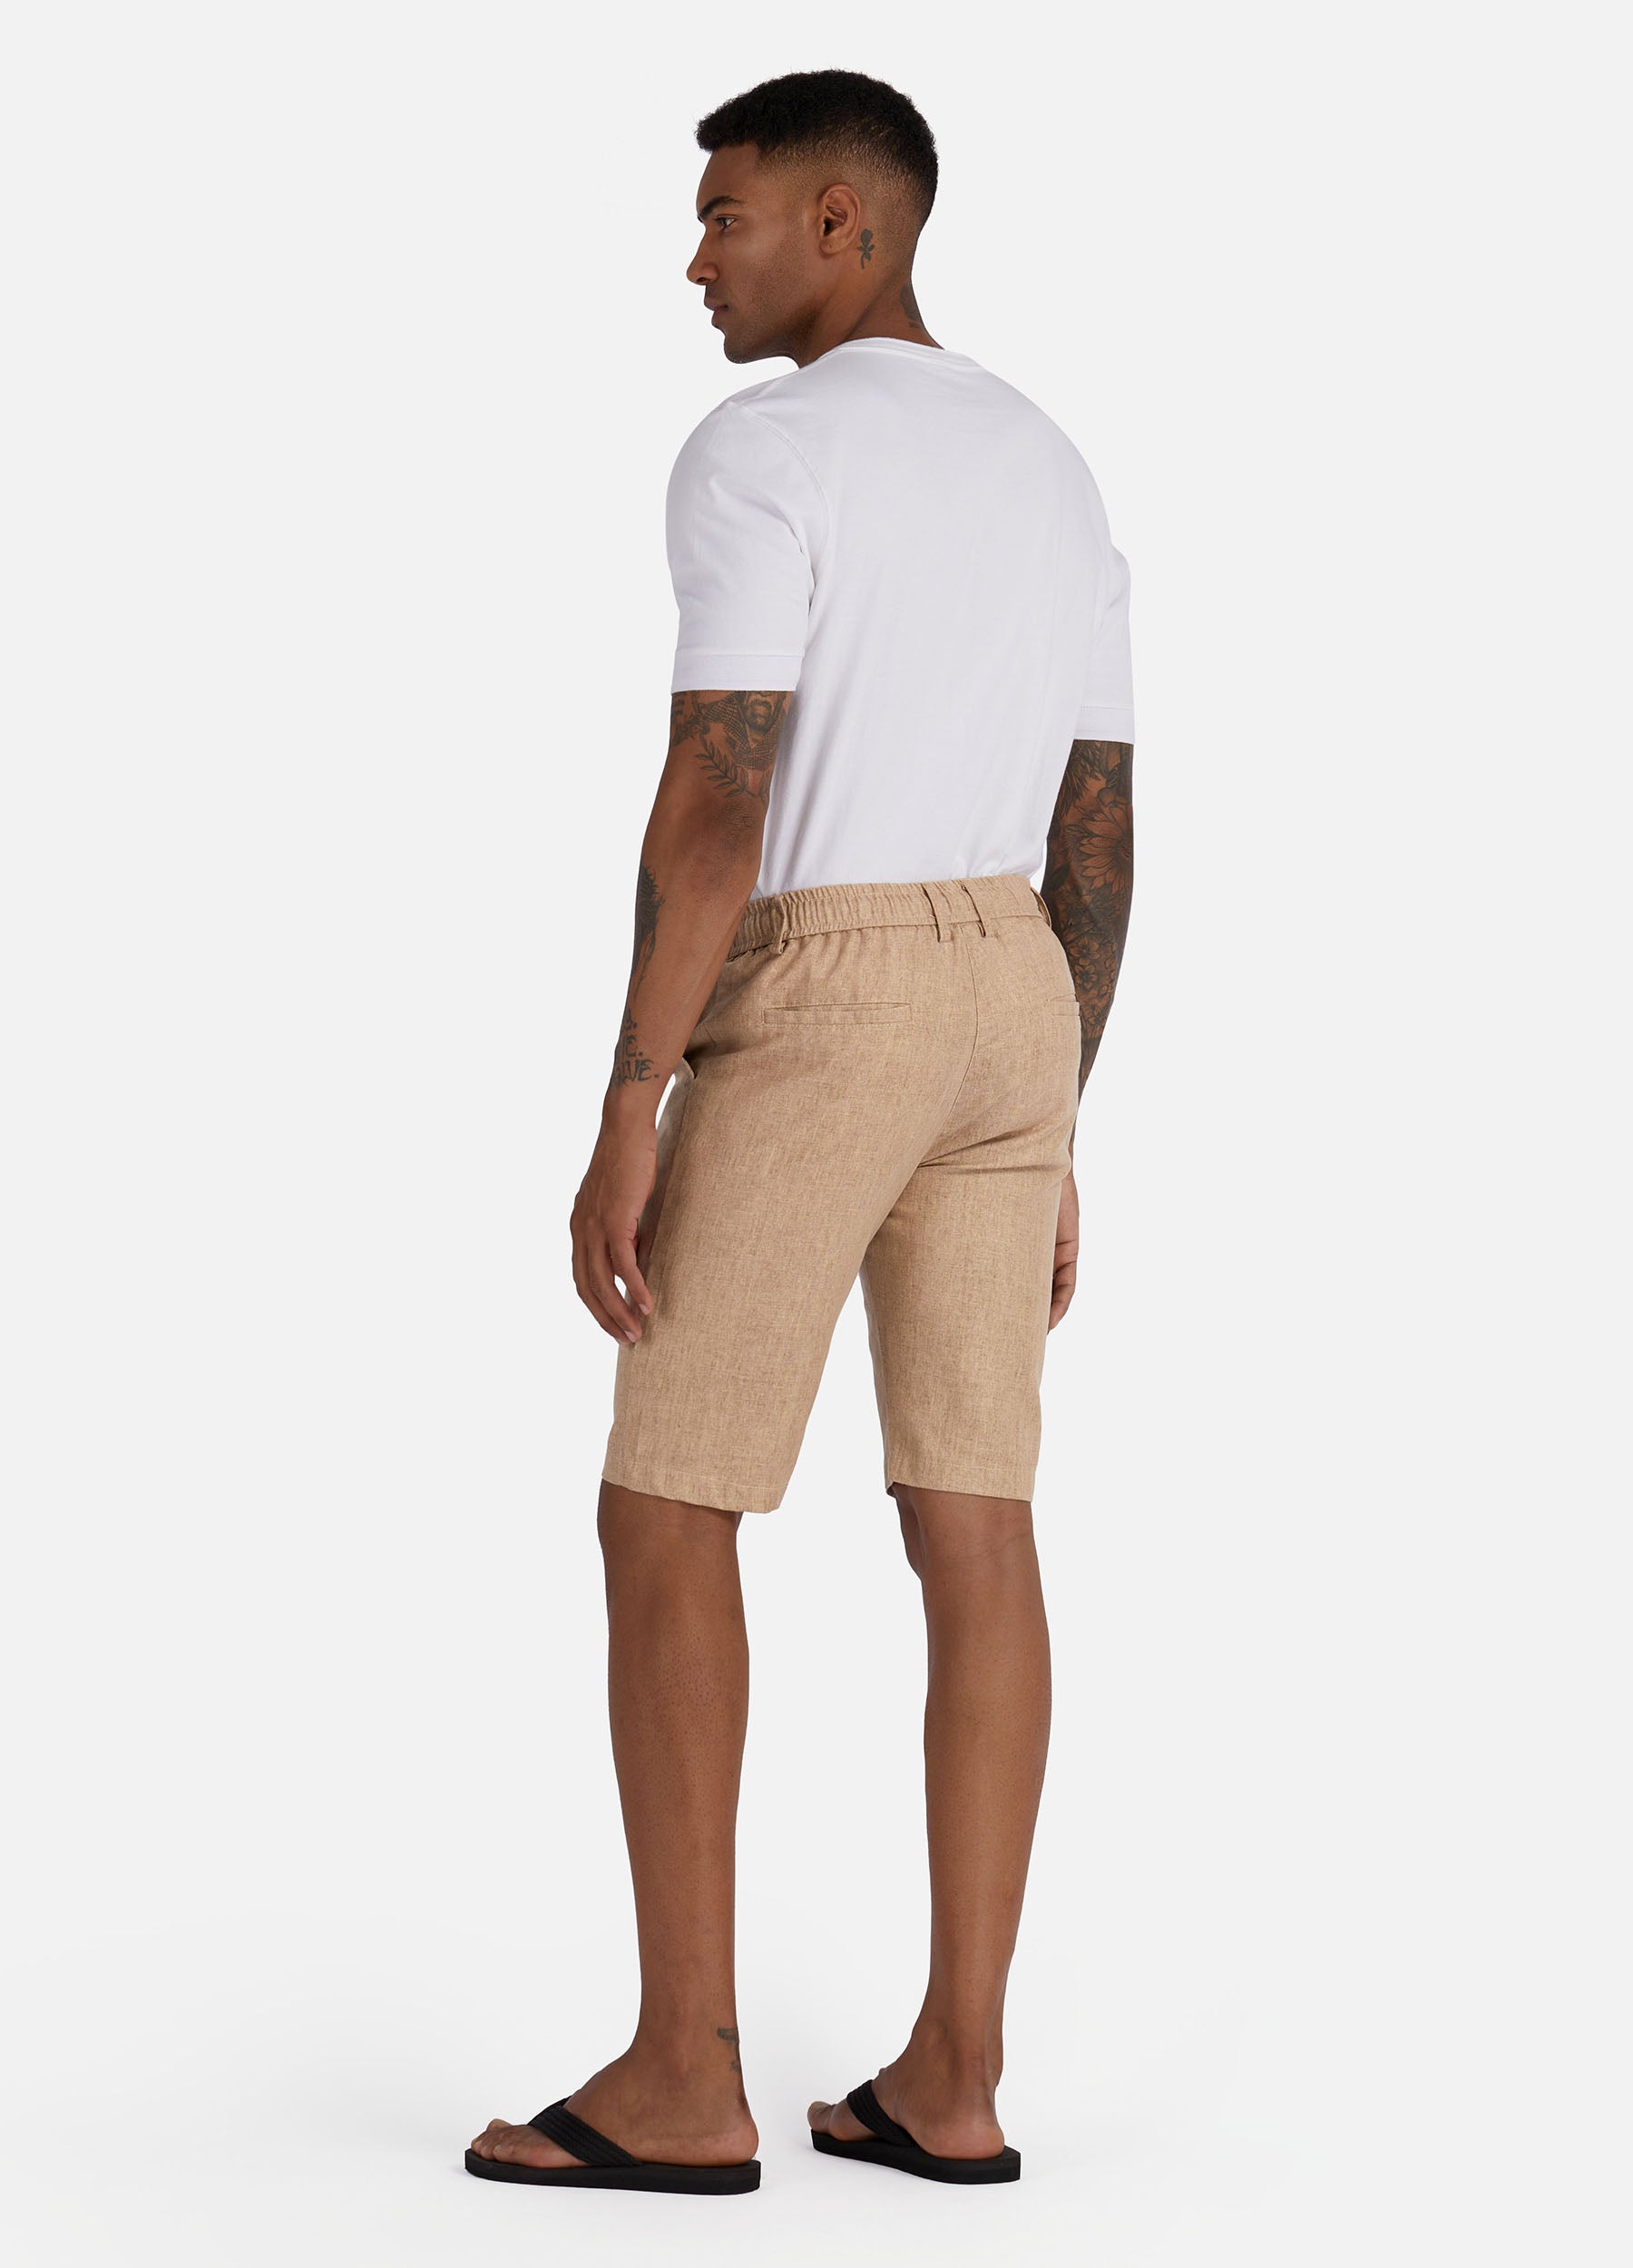 1PA1 Men's Cotton Linen Flat Front Shorts Drawstring Elastic Waist Beach Shorts(Clearance)